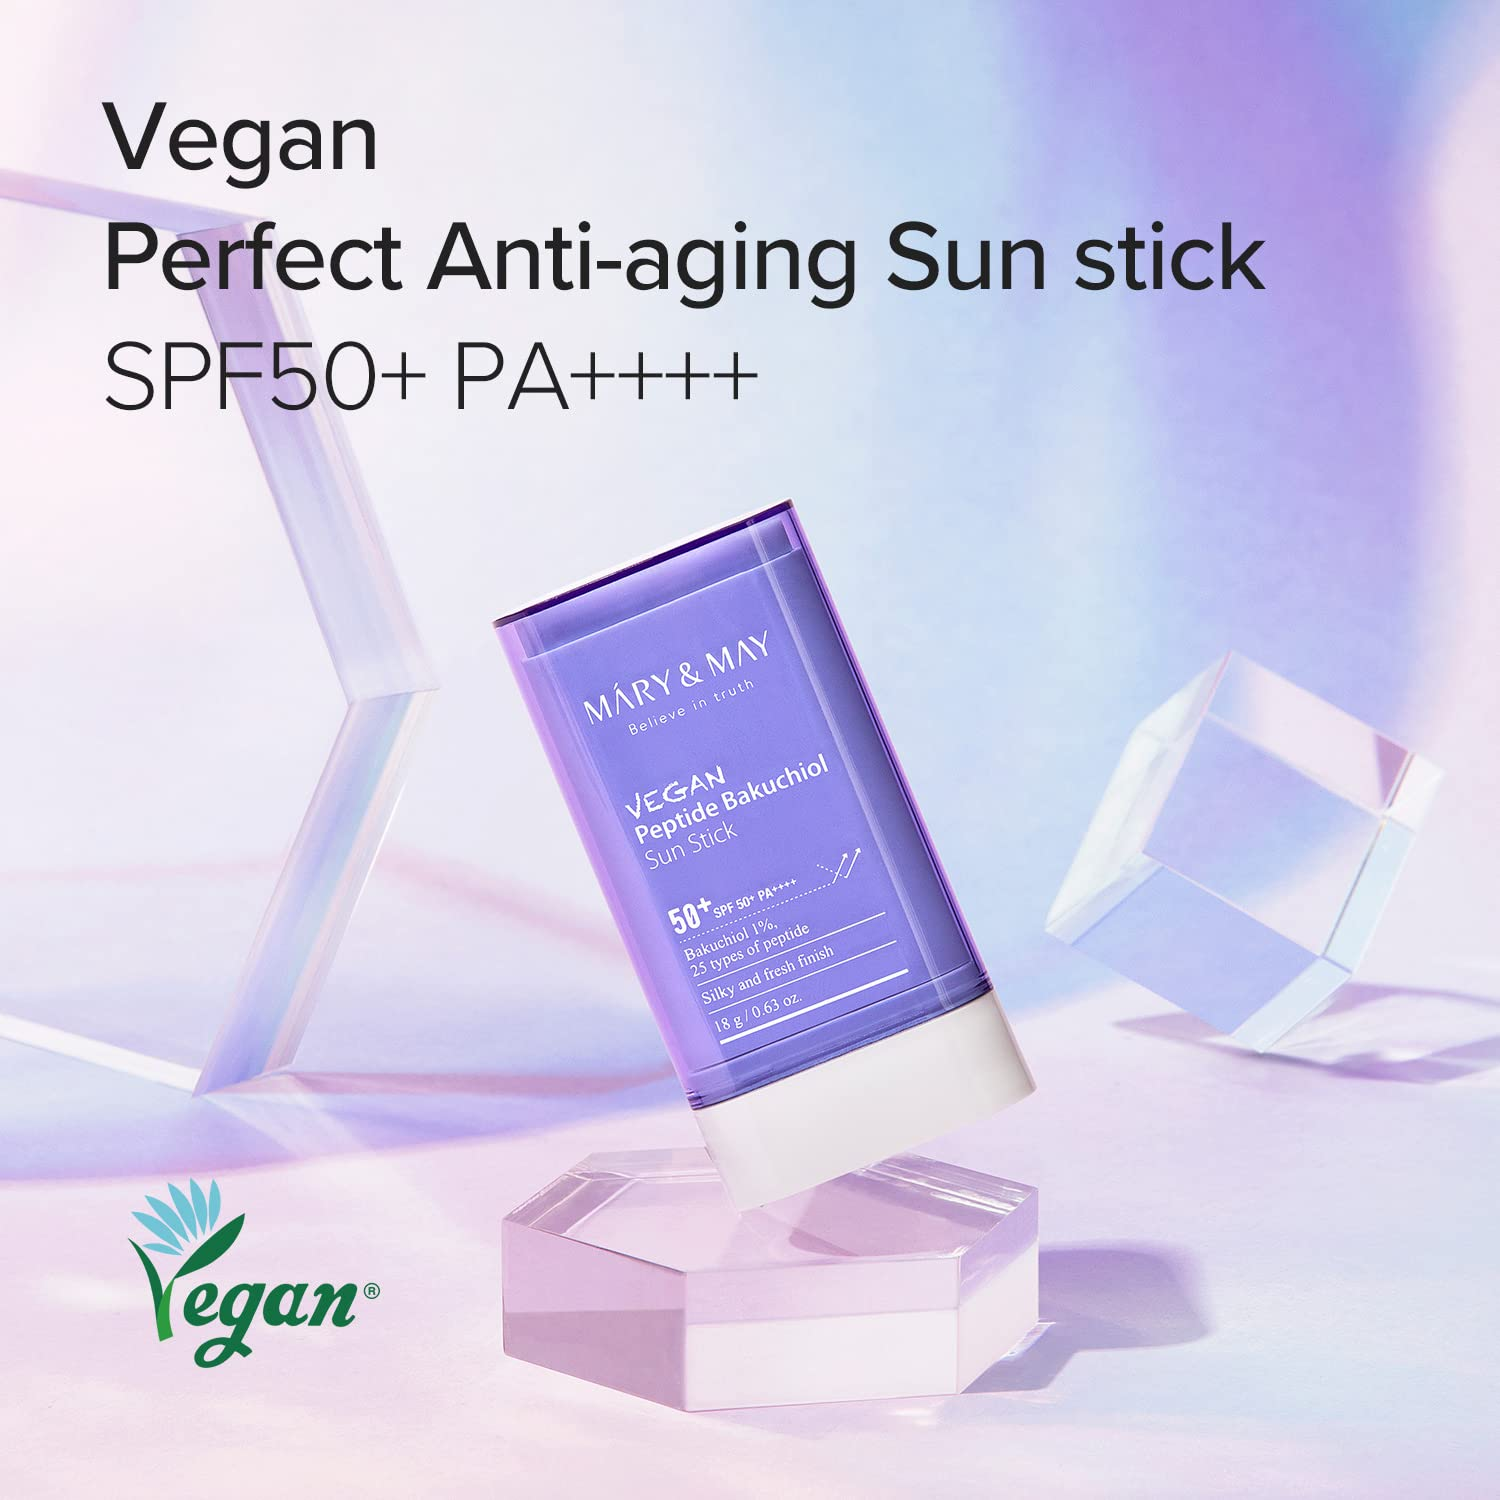 Vegan Peptide Bakuchiol Sun Stick SPF50+ PA++++